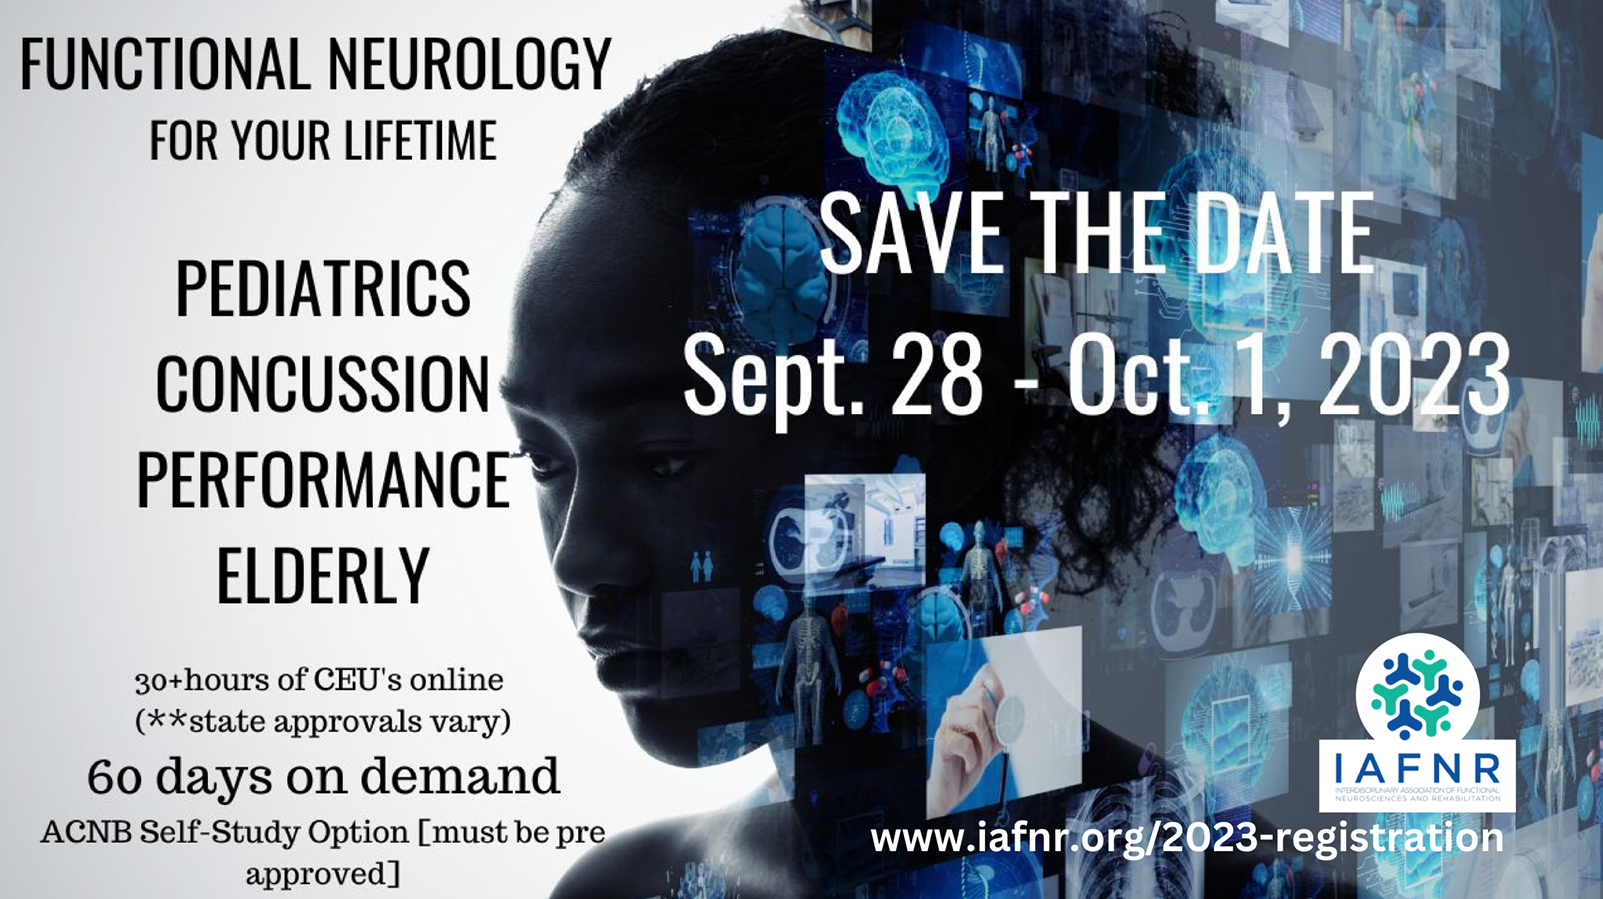 Functional Neurology for Your Lifetime event registration for September 28 through October 1